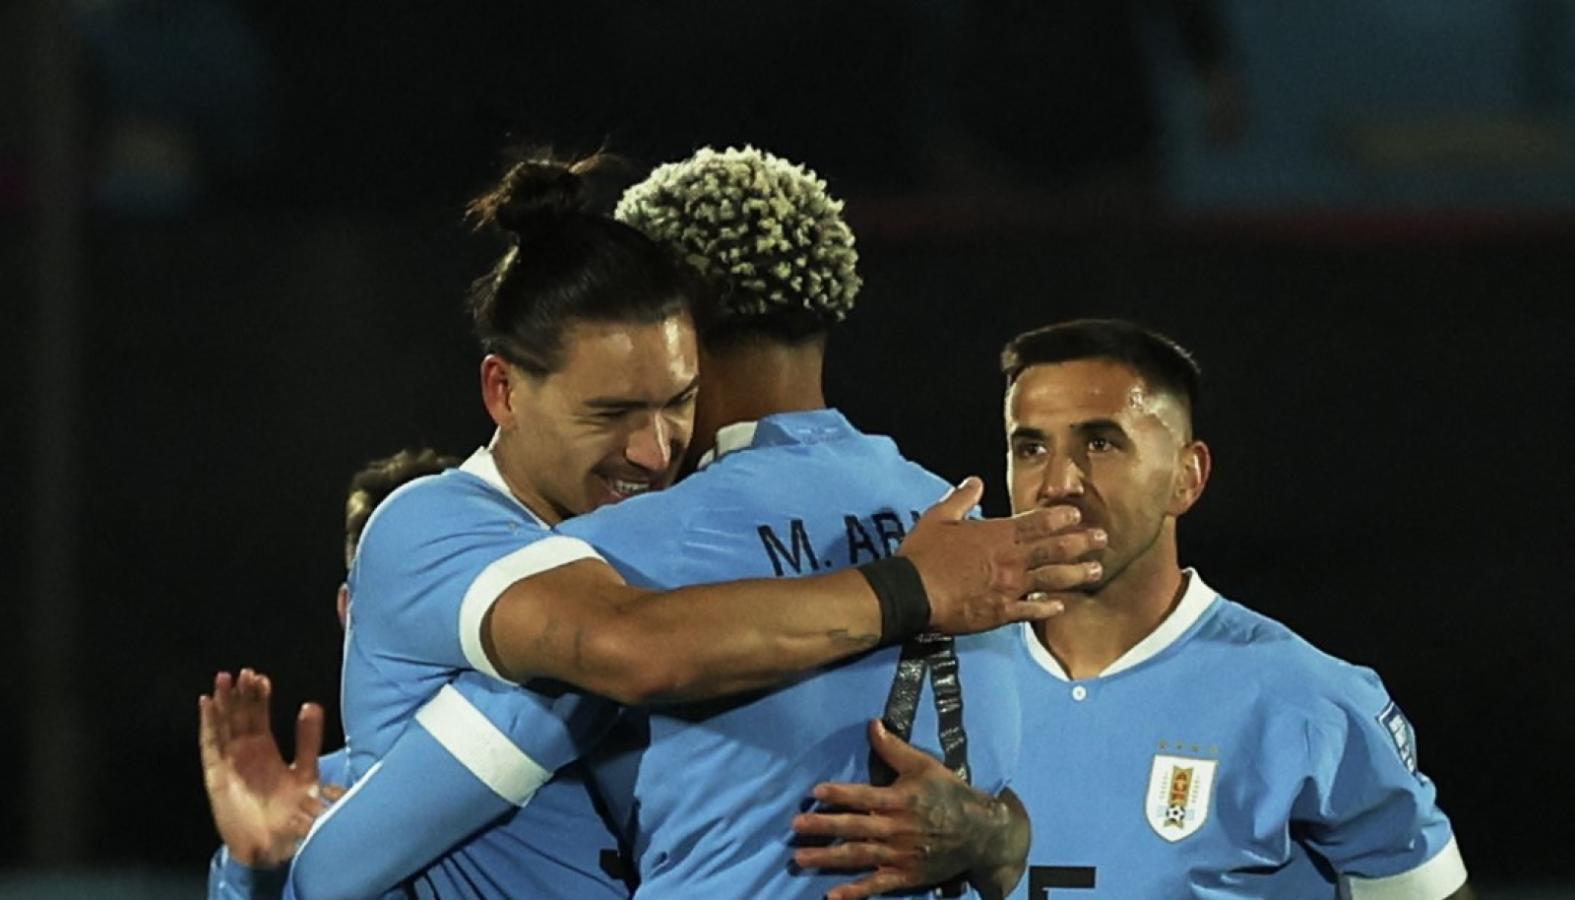 Eliminatorias Conmebol: Uruguay vs Brasil EN VIVO. Marcelo Bielsa hoy en  Eliminatorias Conmebol 2023